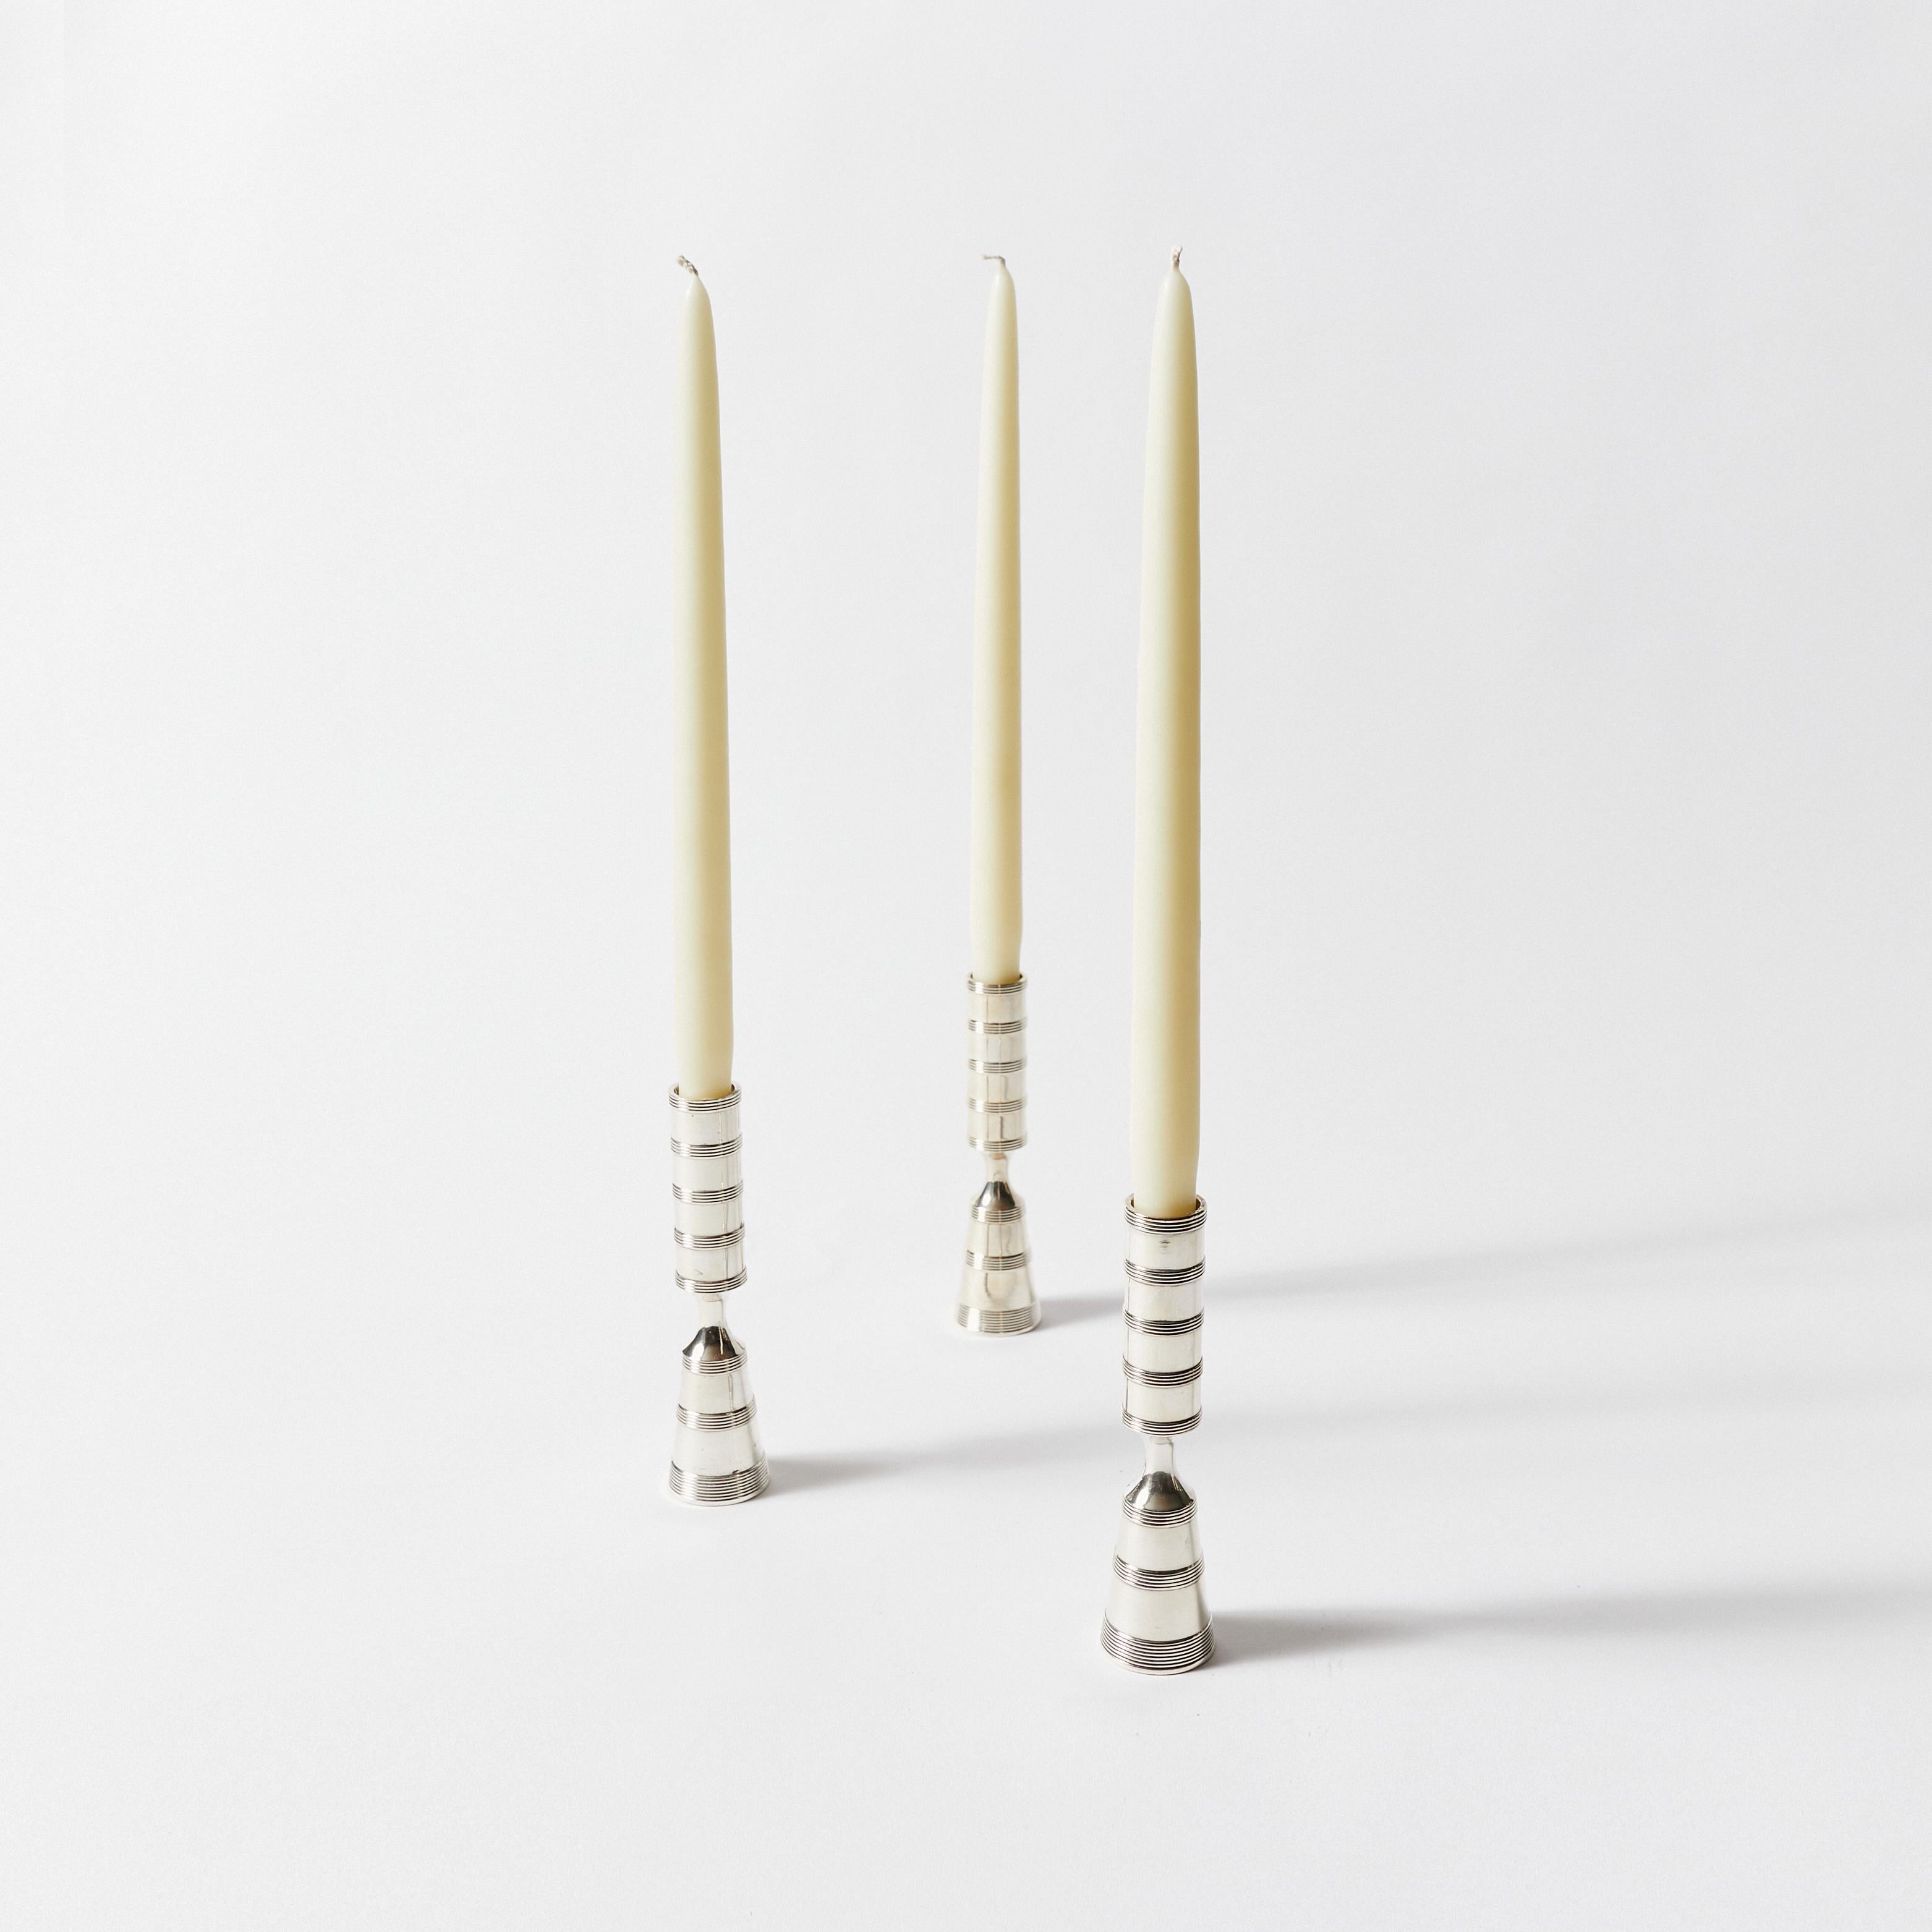 Set of thirty eight silver plated pilar candlesticks. Designed by Jens Harald Quistgaard for Dansk Designs Copenhagen.